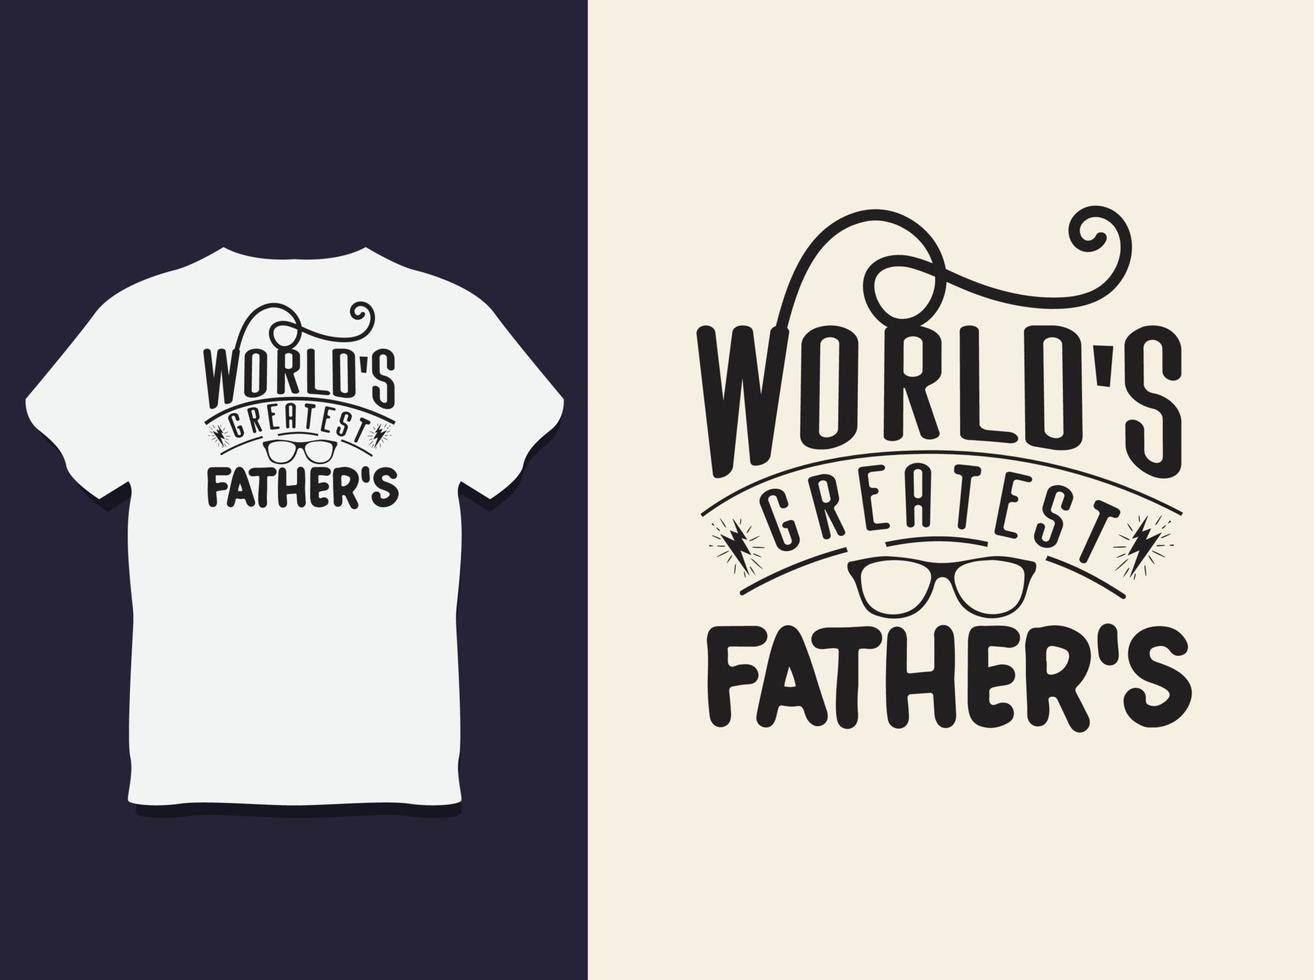 Vatertags-Typografie-T-Shirt-Design mit Vektor